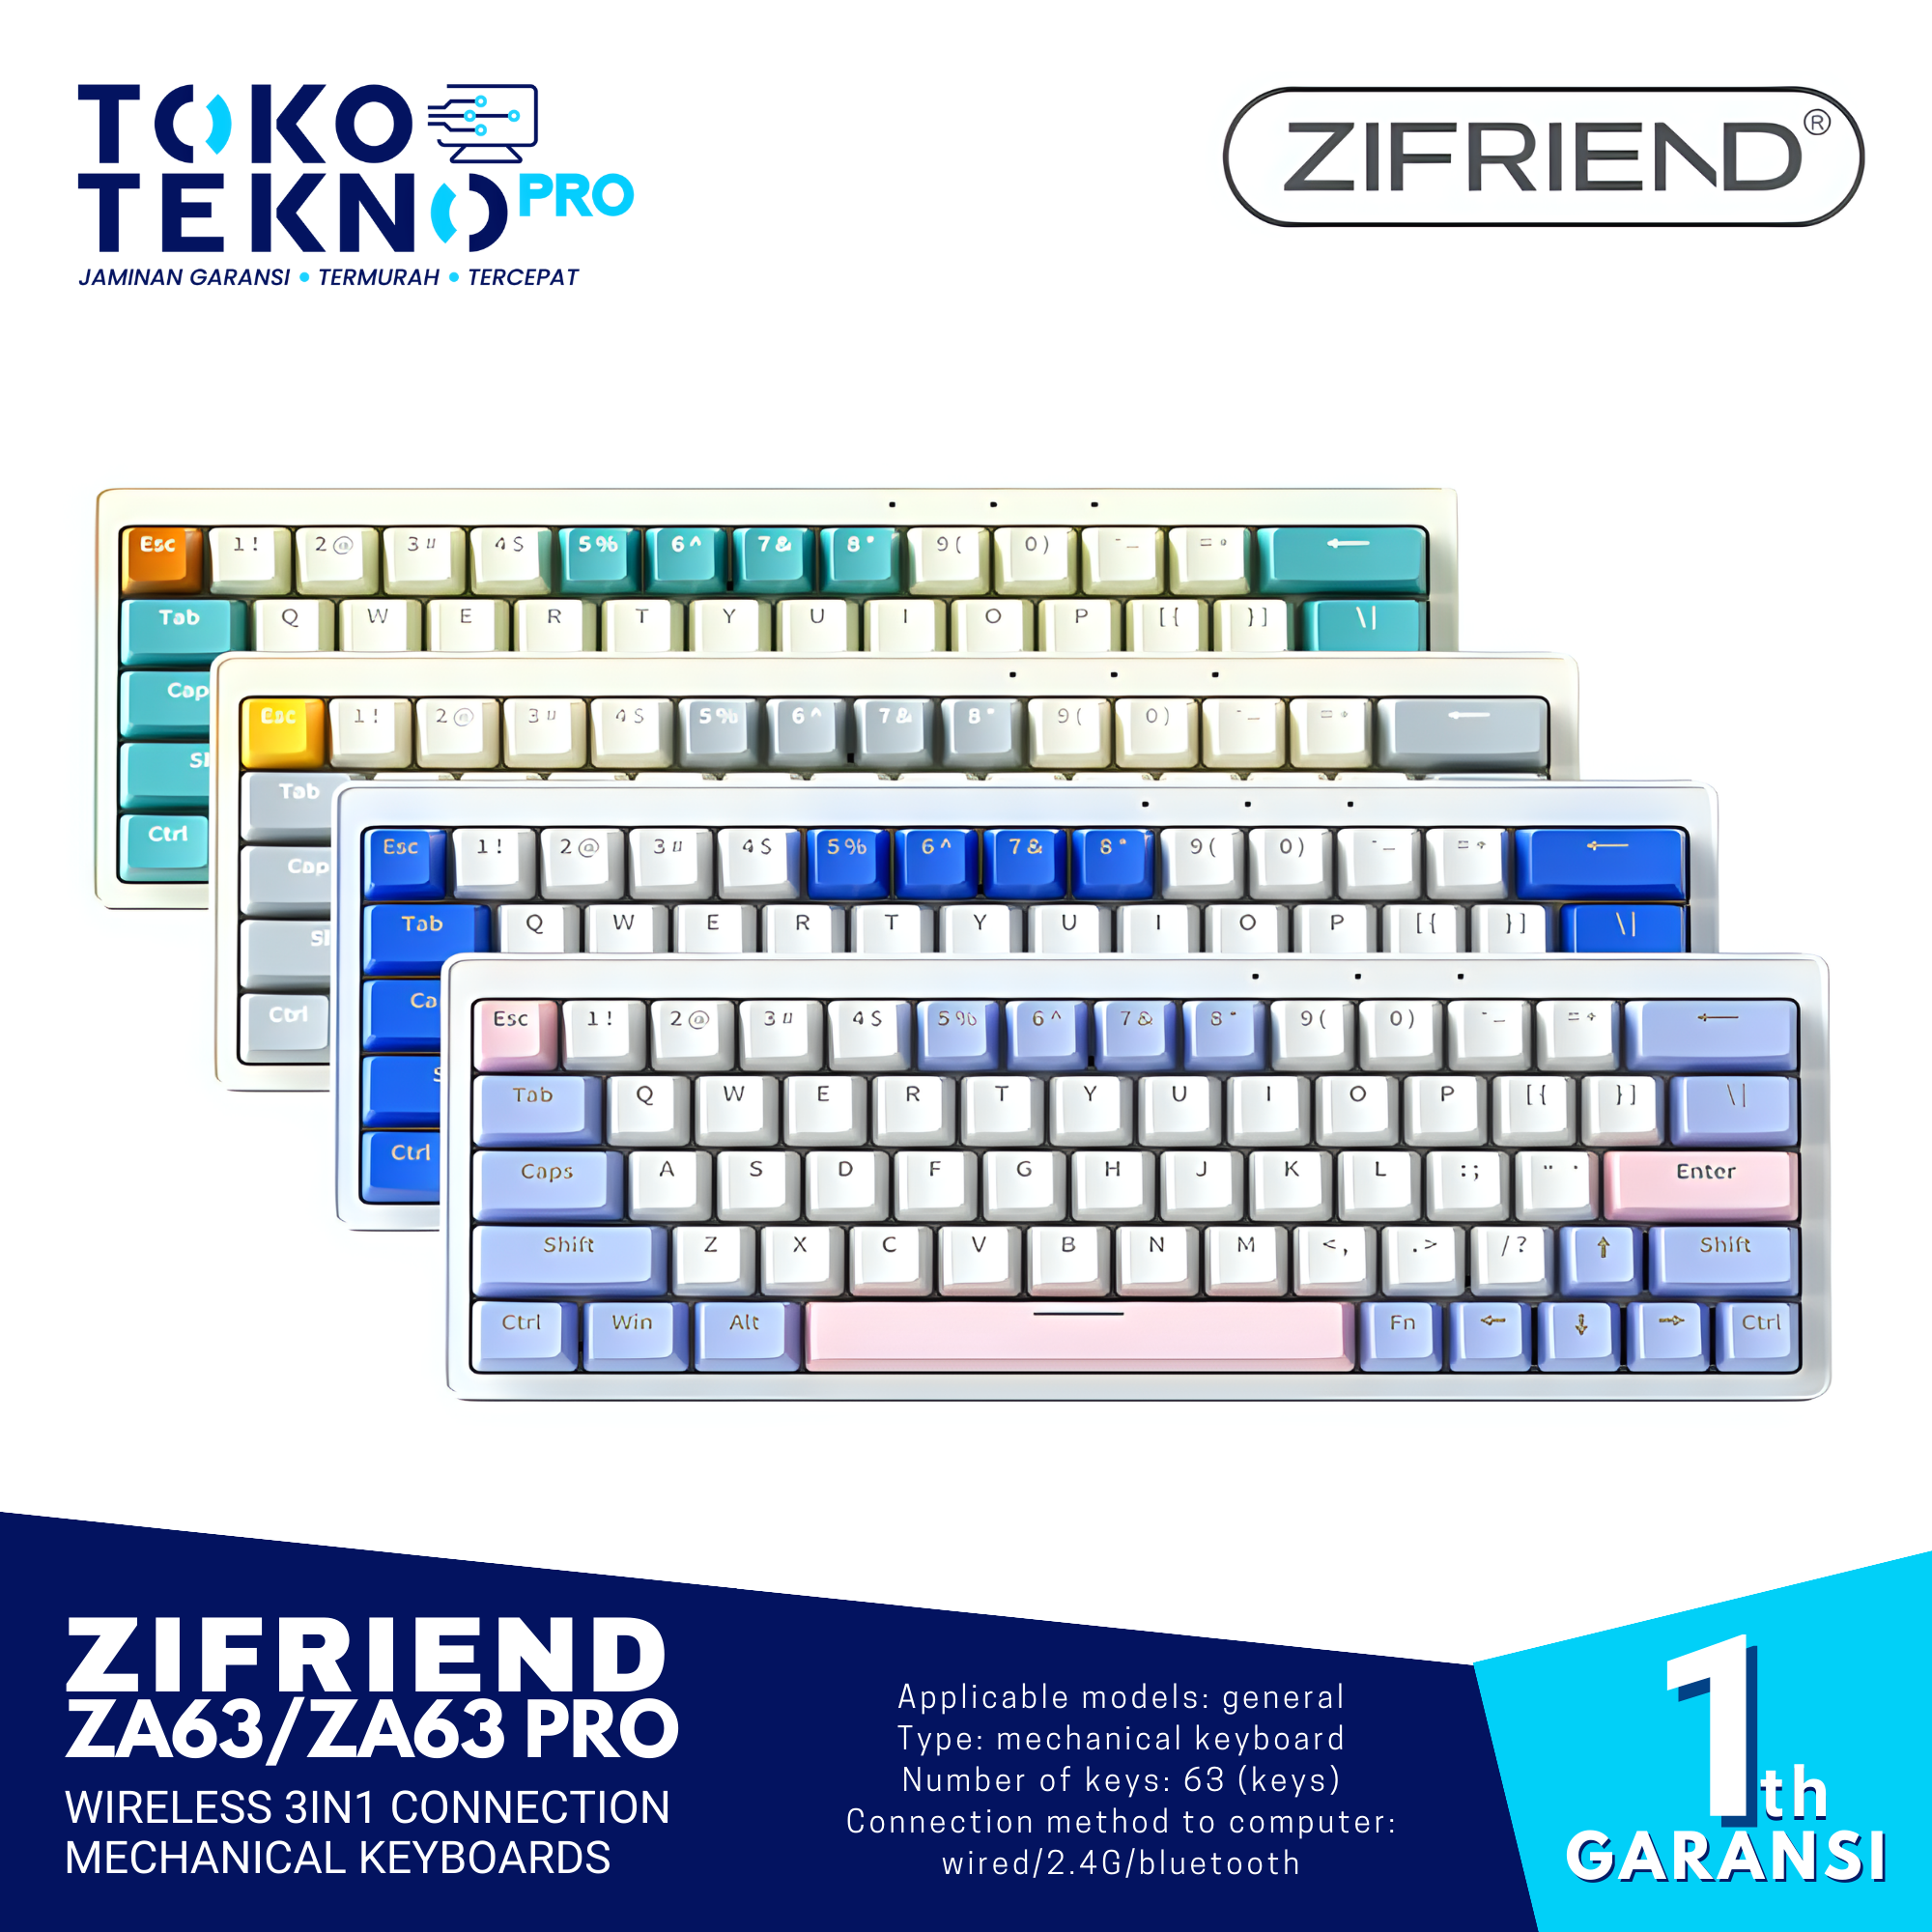 Zifriend ZA63 / ZA63 Pro Wireless 3in1 Connection Mechanical Keyboard